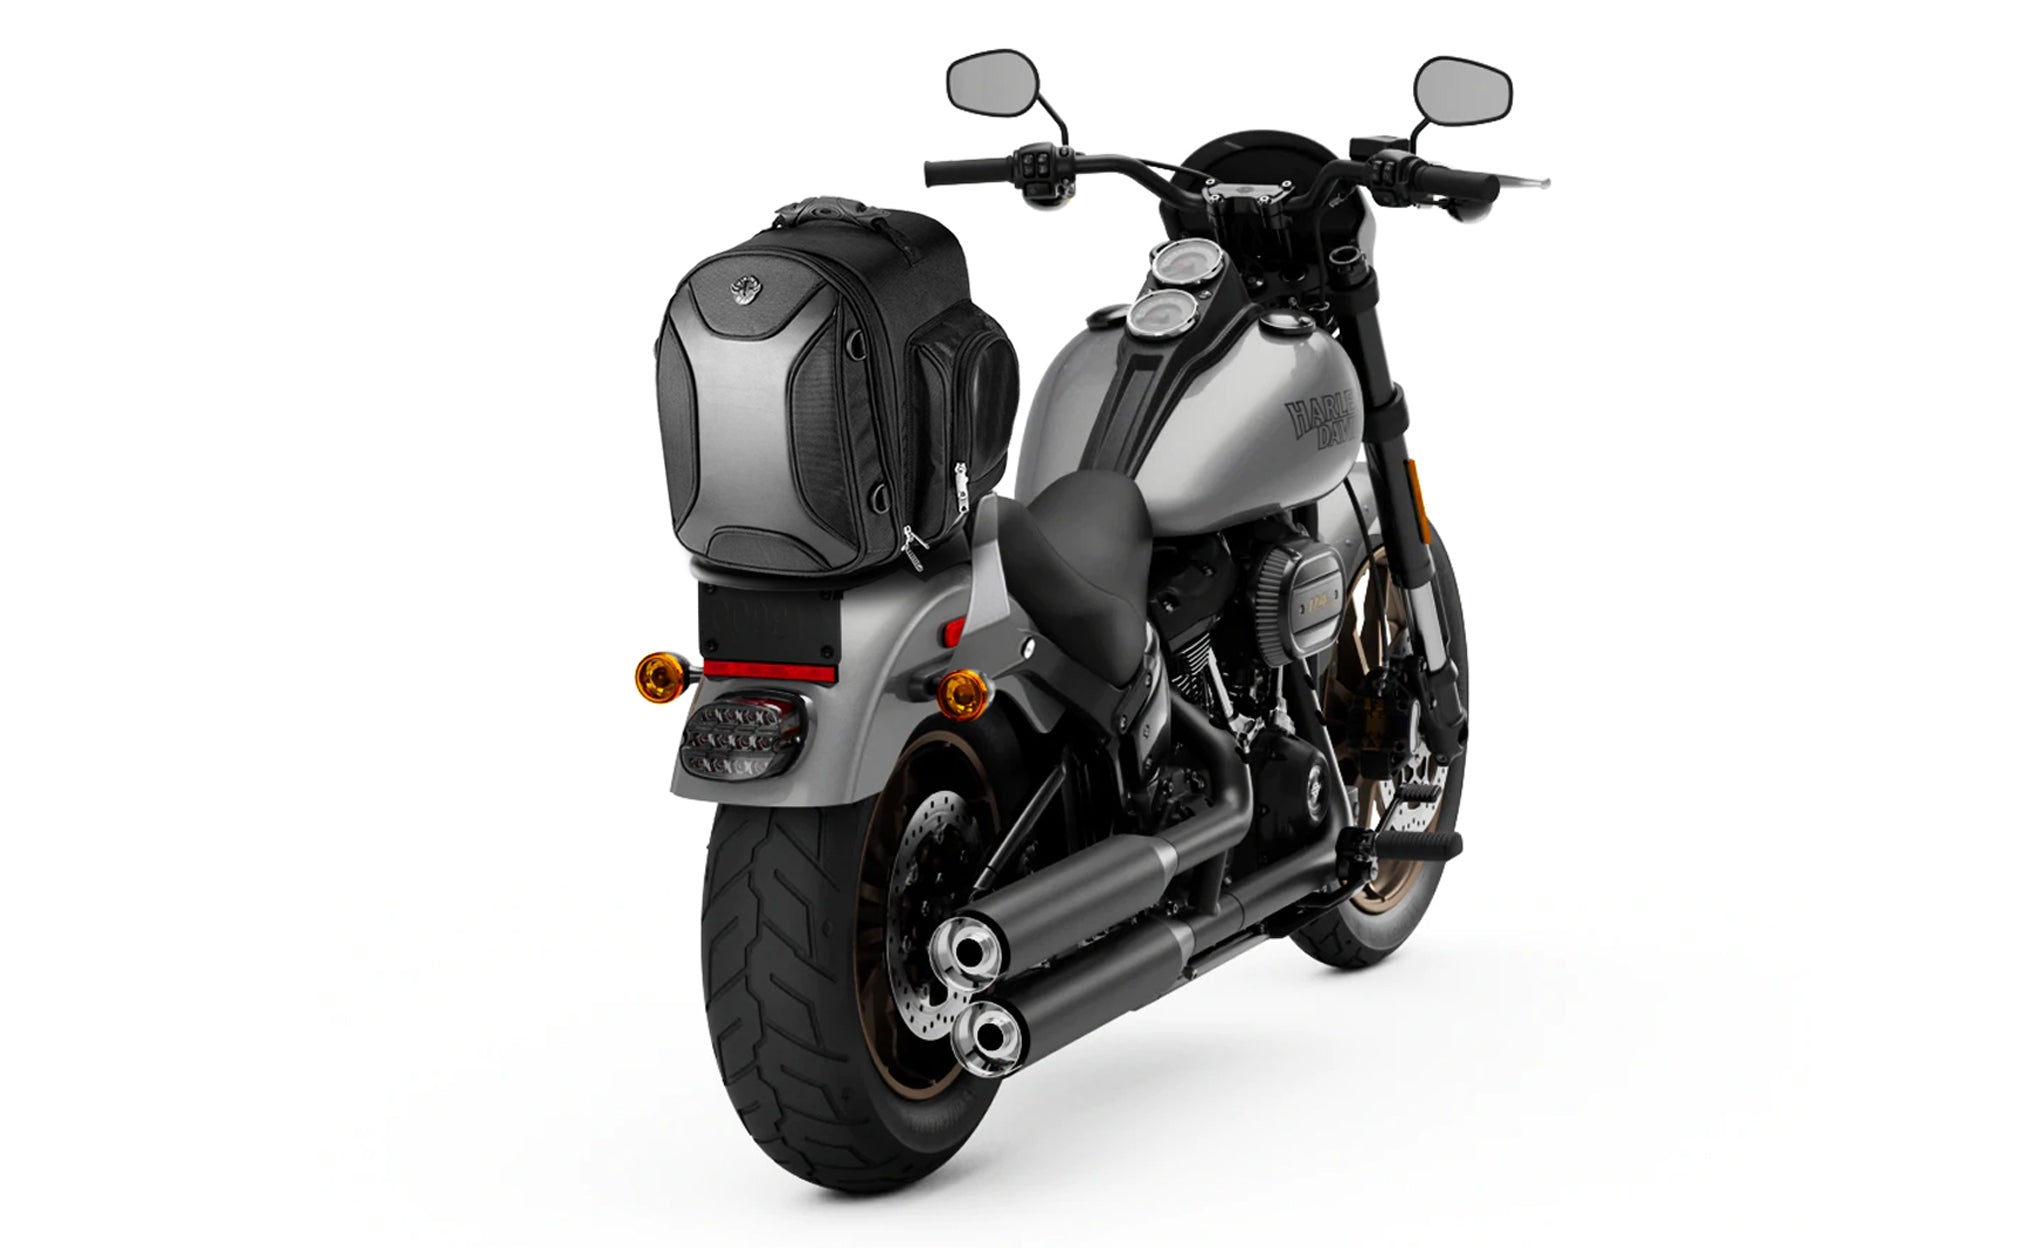 Viking Dagr Small Motorcycle Tail Bag for Harley Davidson Bag on Bike View @expand